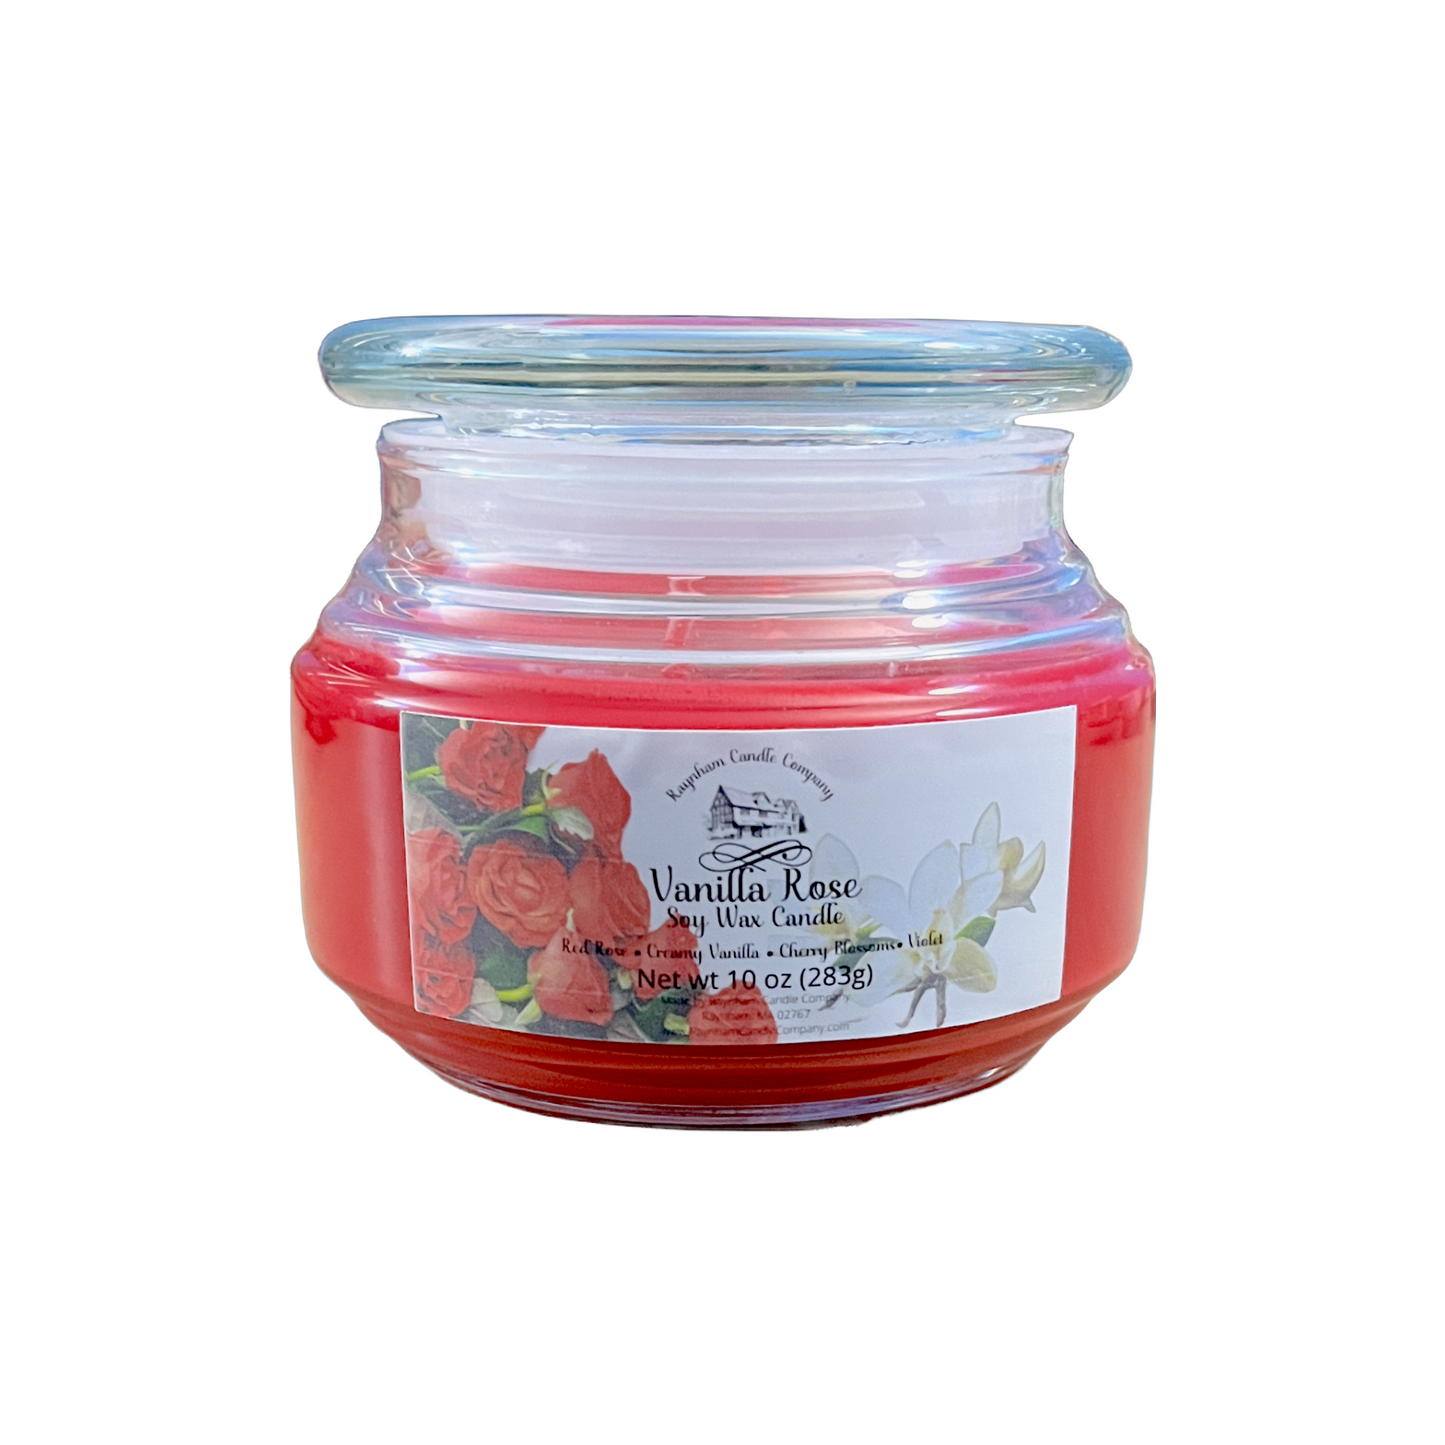 Vanilla Rose - Premium  from Raynham Candle Company  - Just $5! Shop now at Raynham Candle Company 